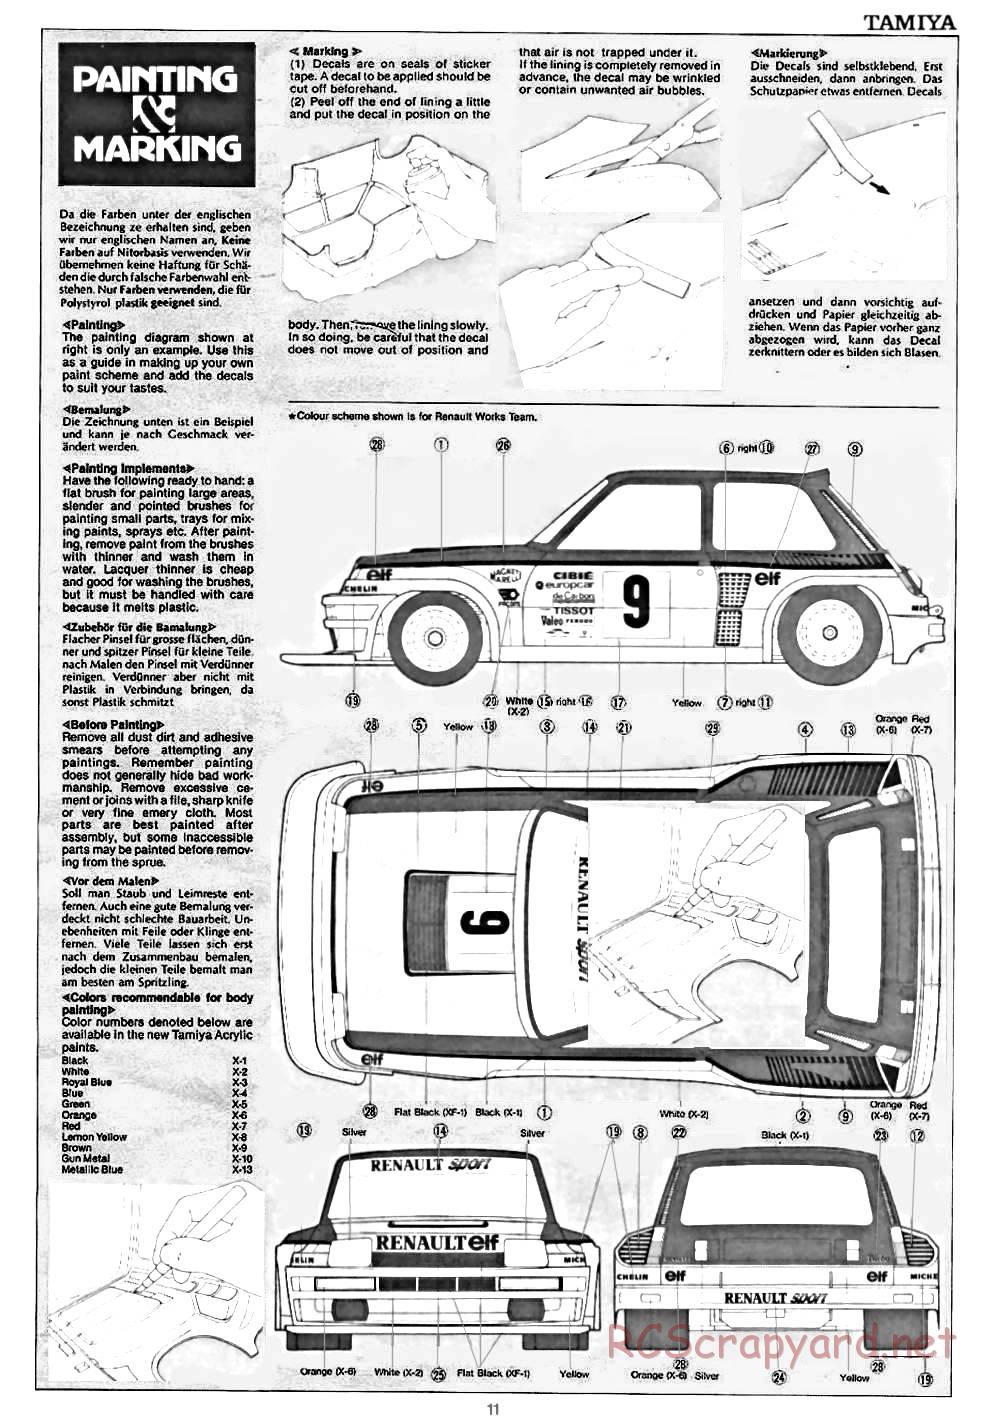 Tamiya - Renault 5 Turbo (CS) - 58026 - Manual - Page 11